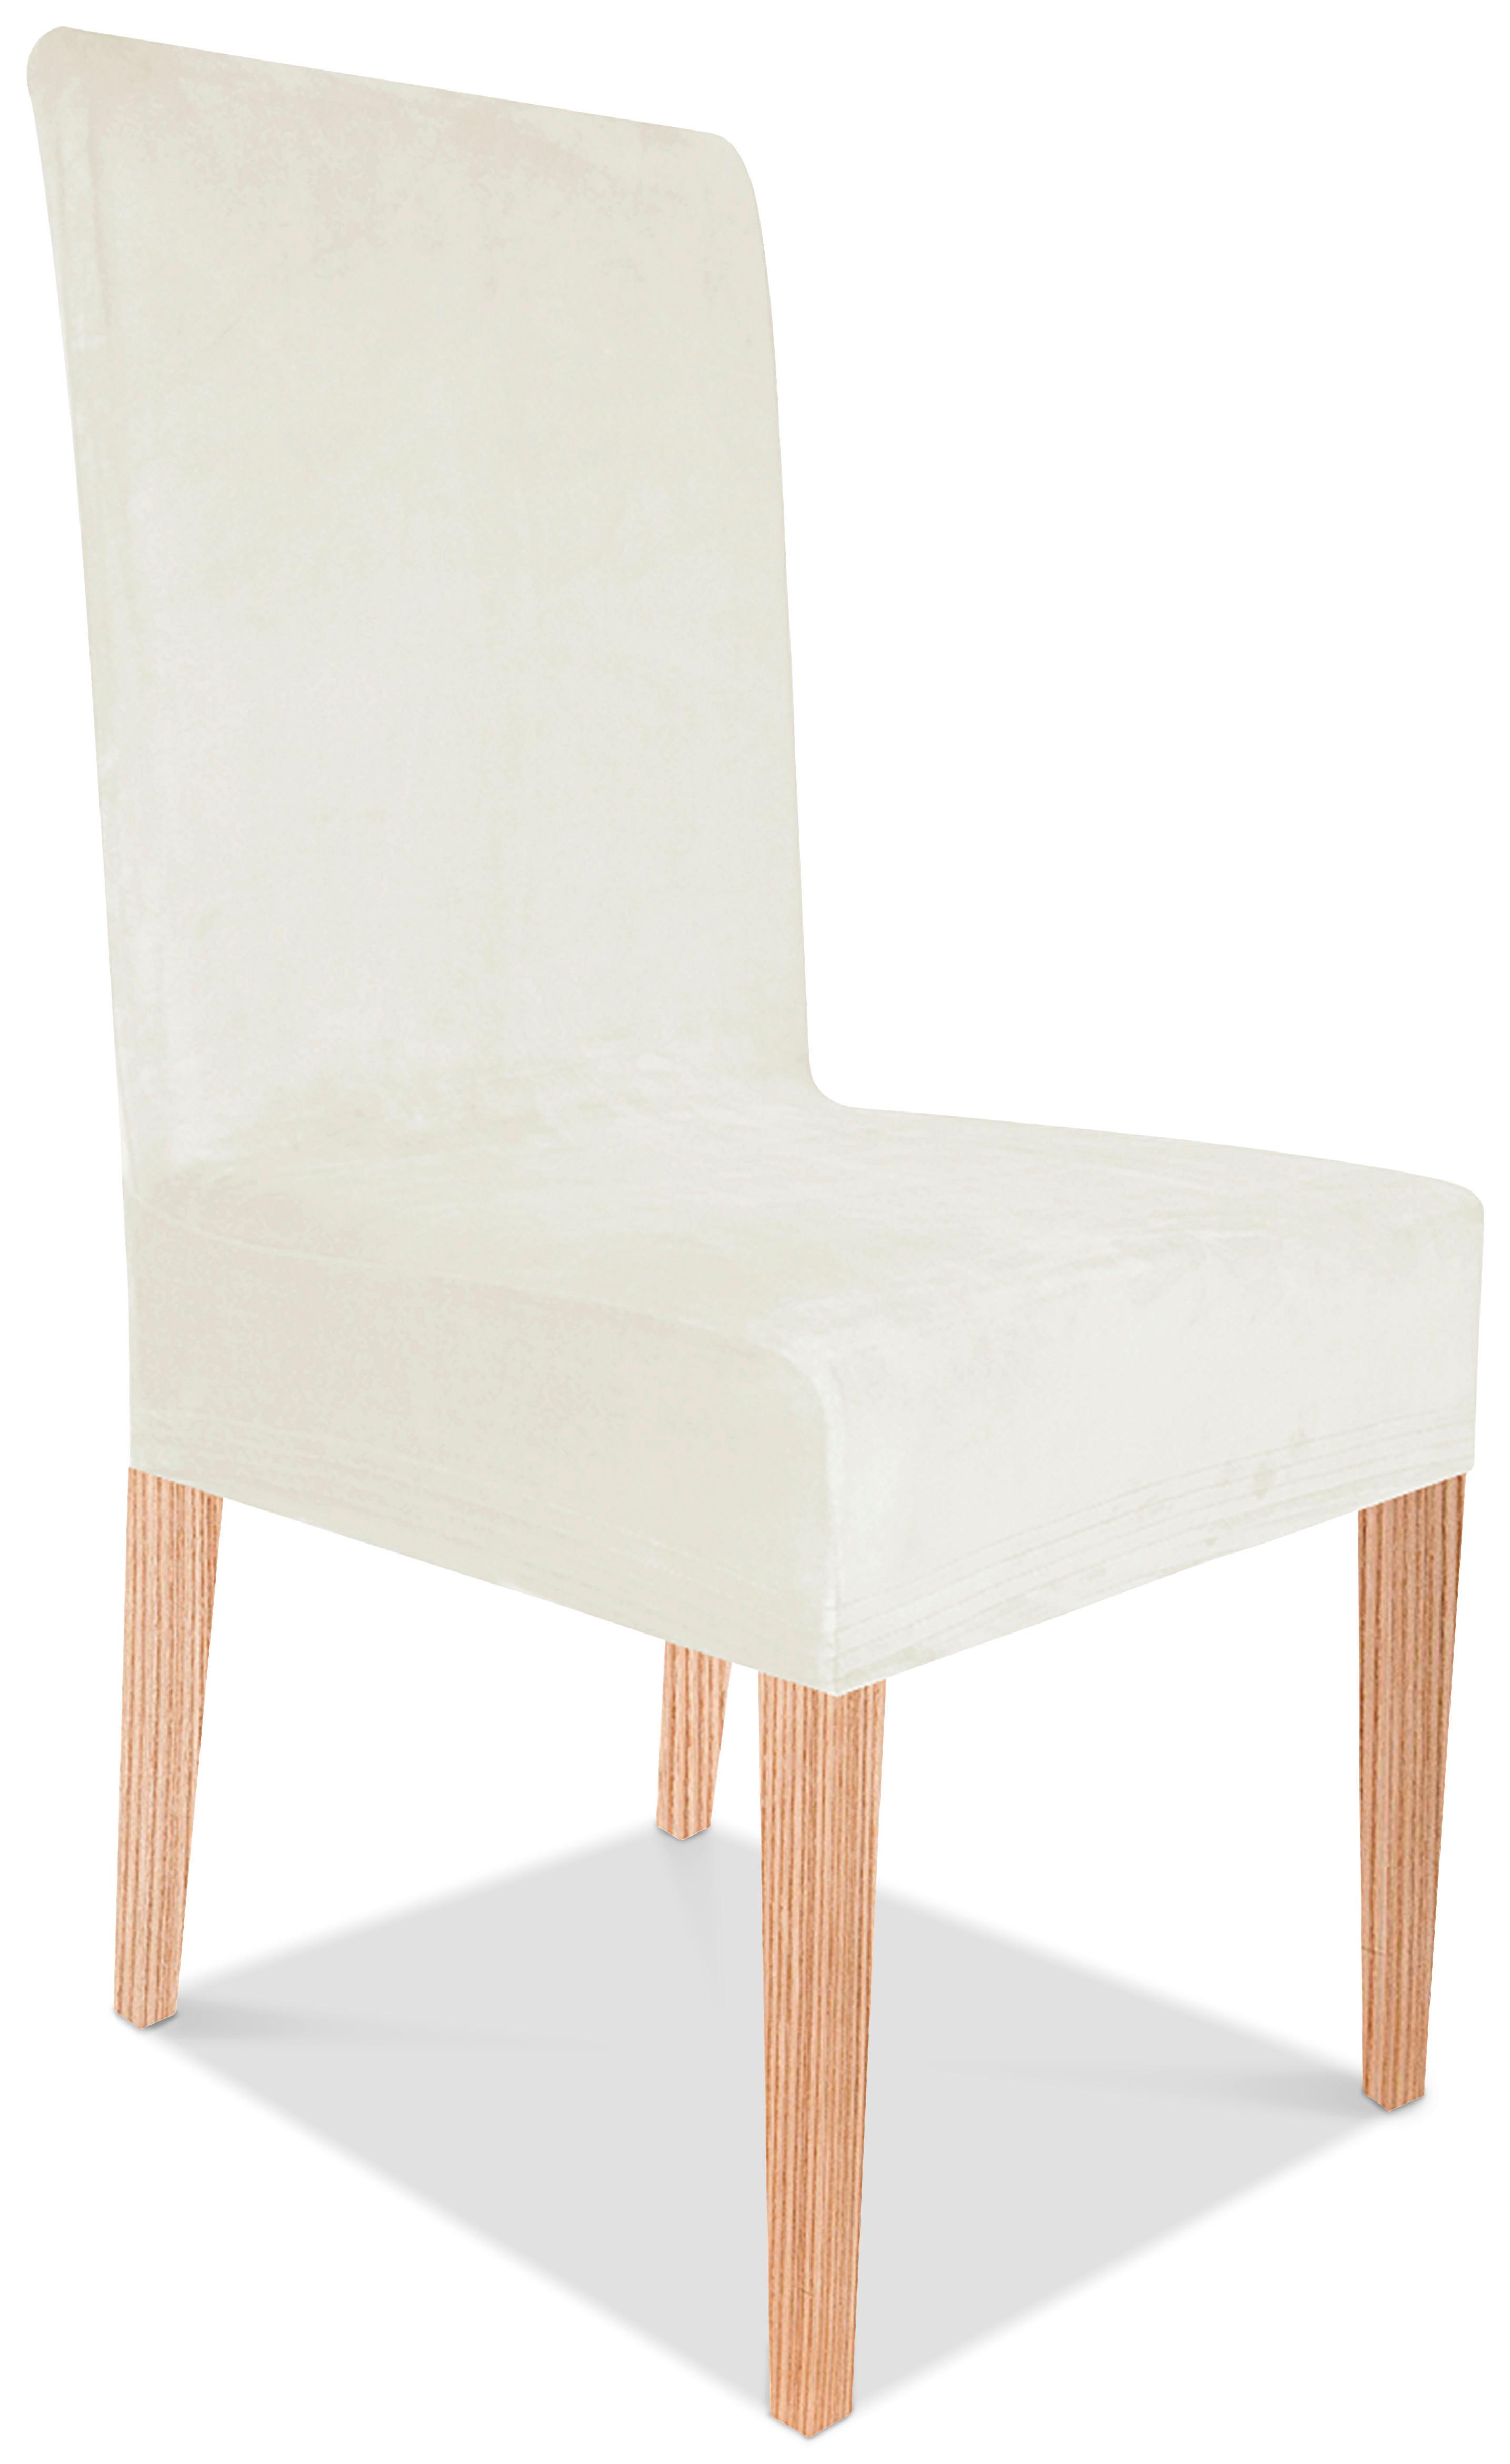 Husă pentru scaun Henry - alb, Romantik / Landhaus, textil (40/65/45cm) - Modern Living